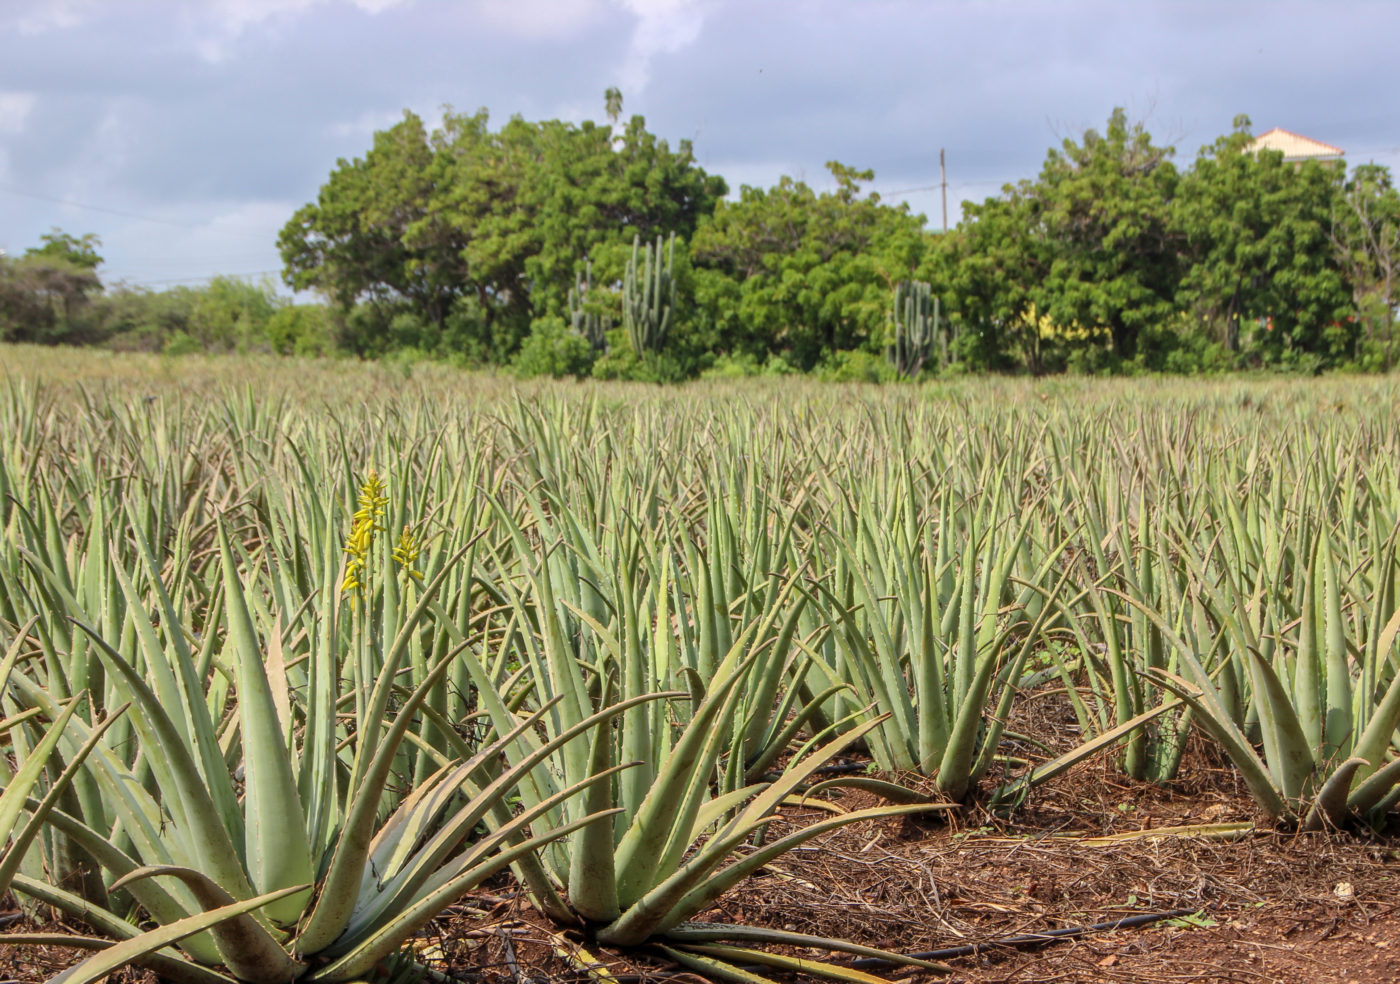 Curacao’s Curaloe Ecotourism and Health Benefits of Aloe Vera